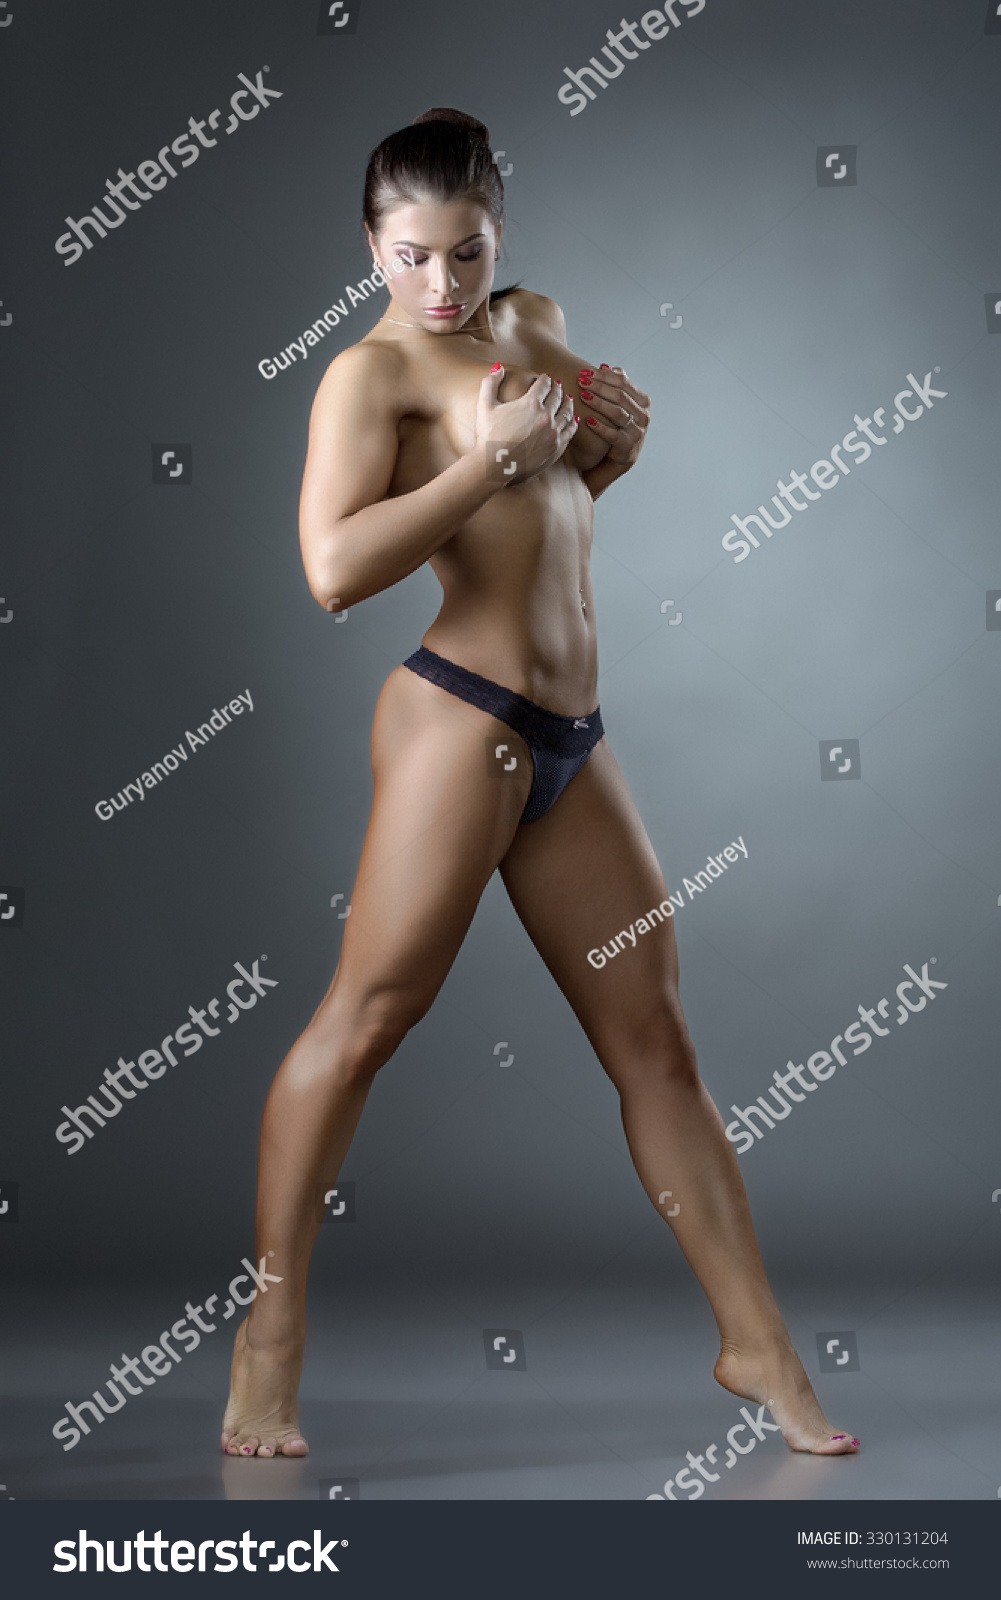 Sports Athletes Nude